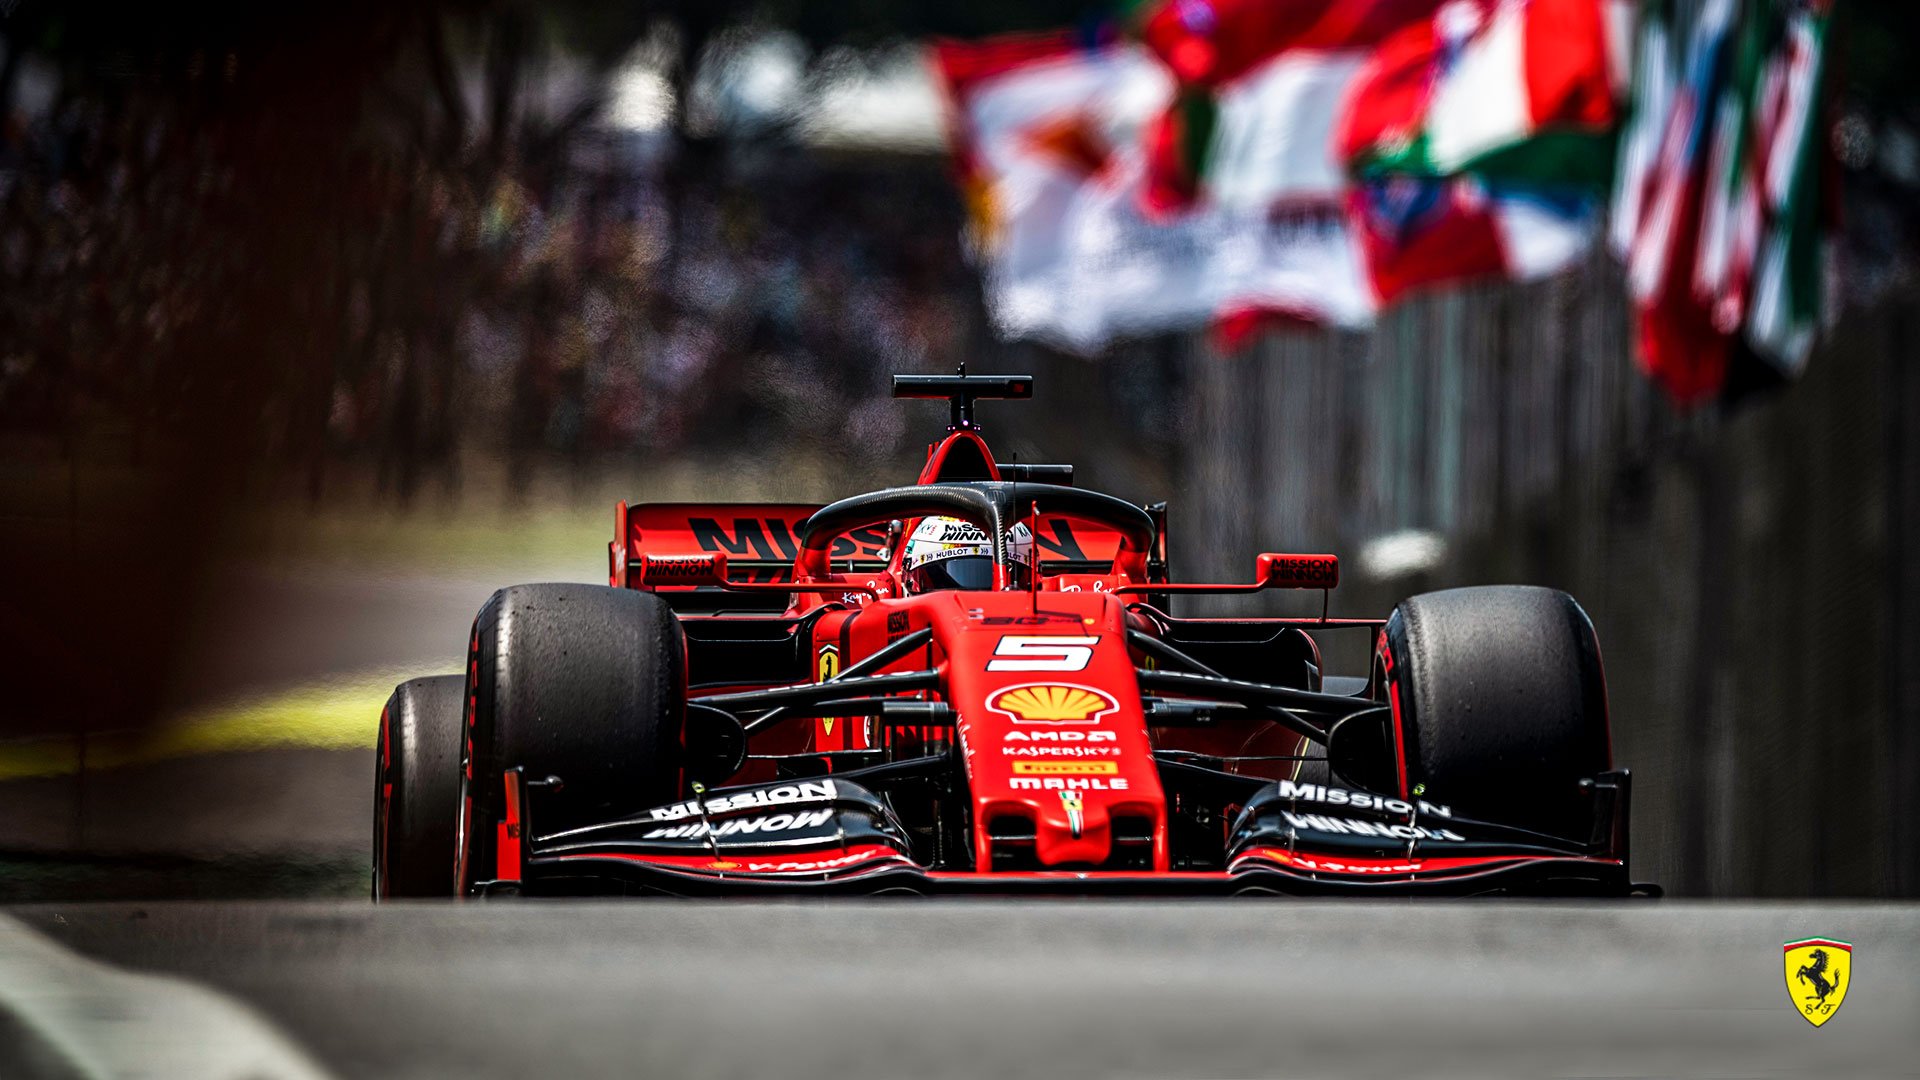 Scuderia Ferrari's wallpaper wednesday. Enjoy this week's drop